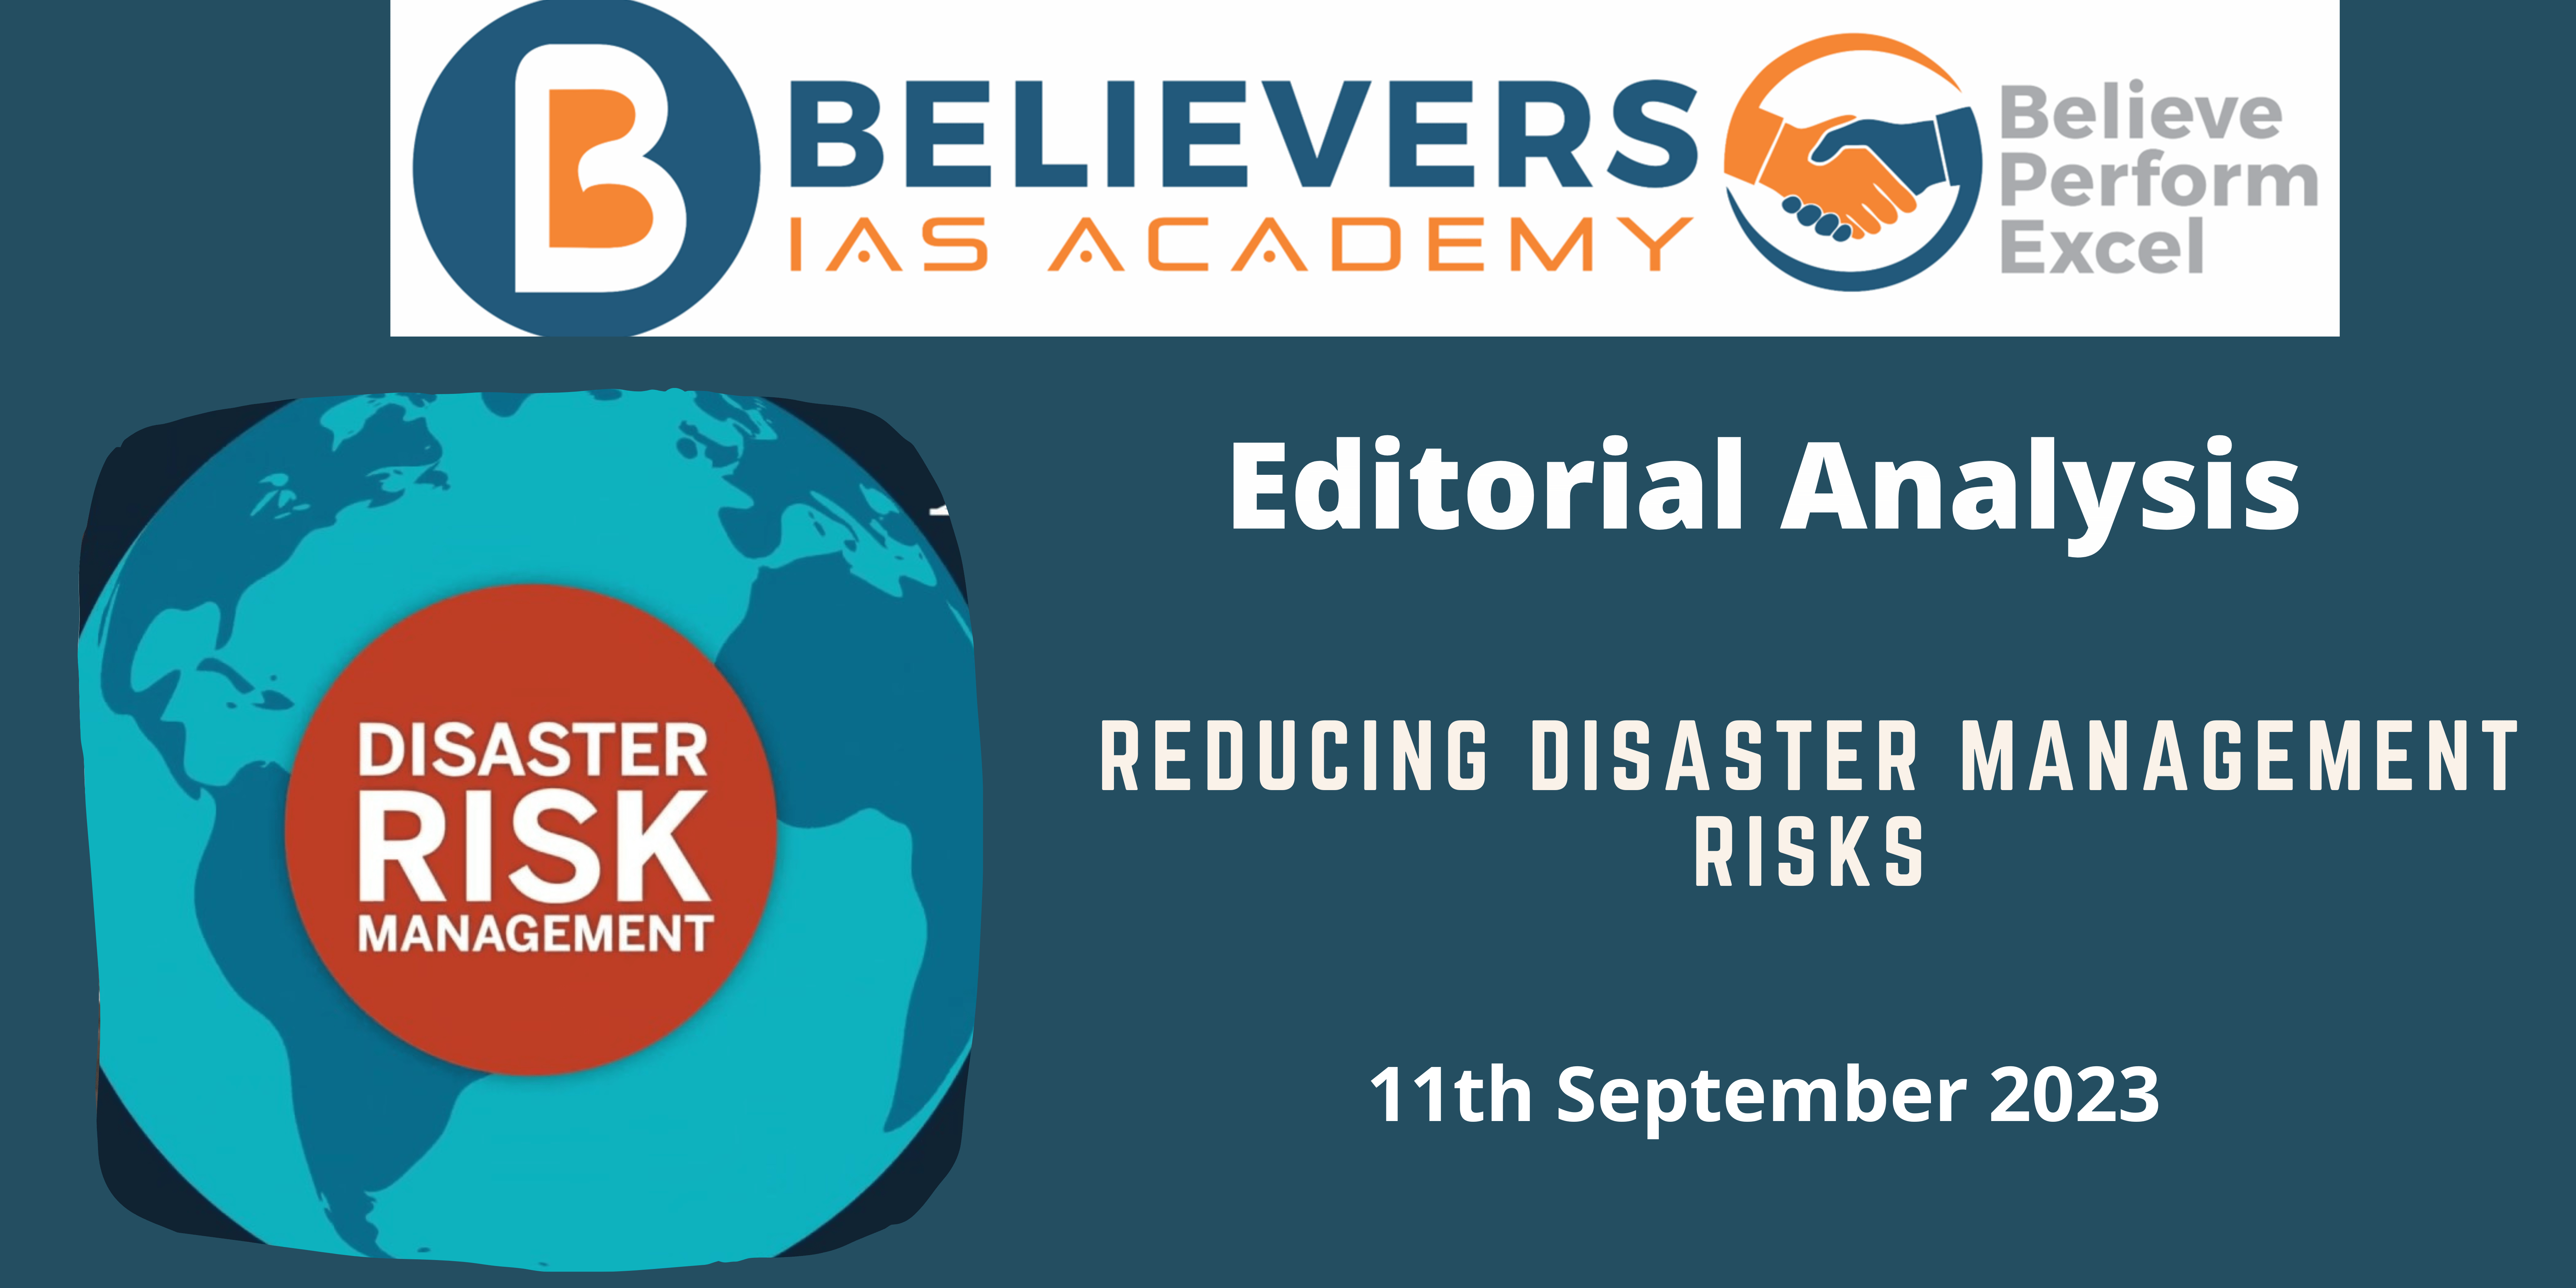 Reducing disaster management risks